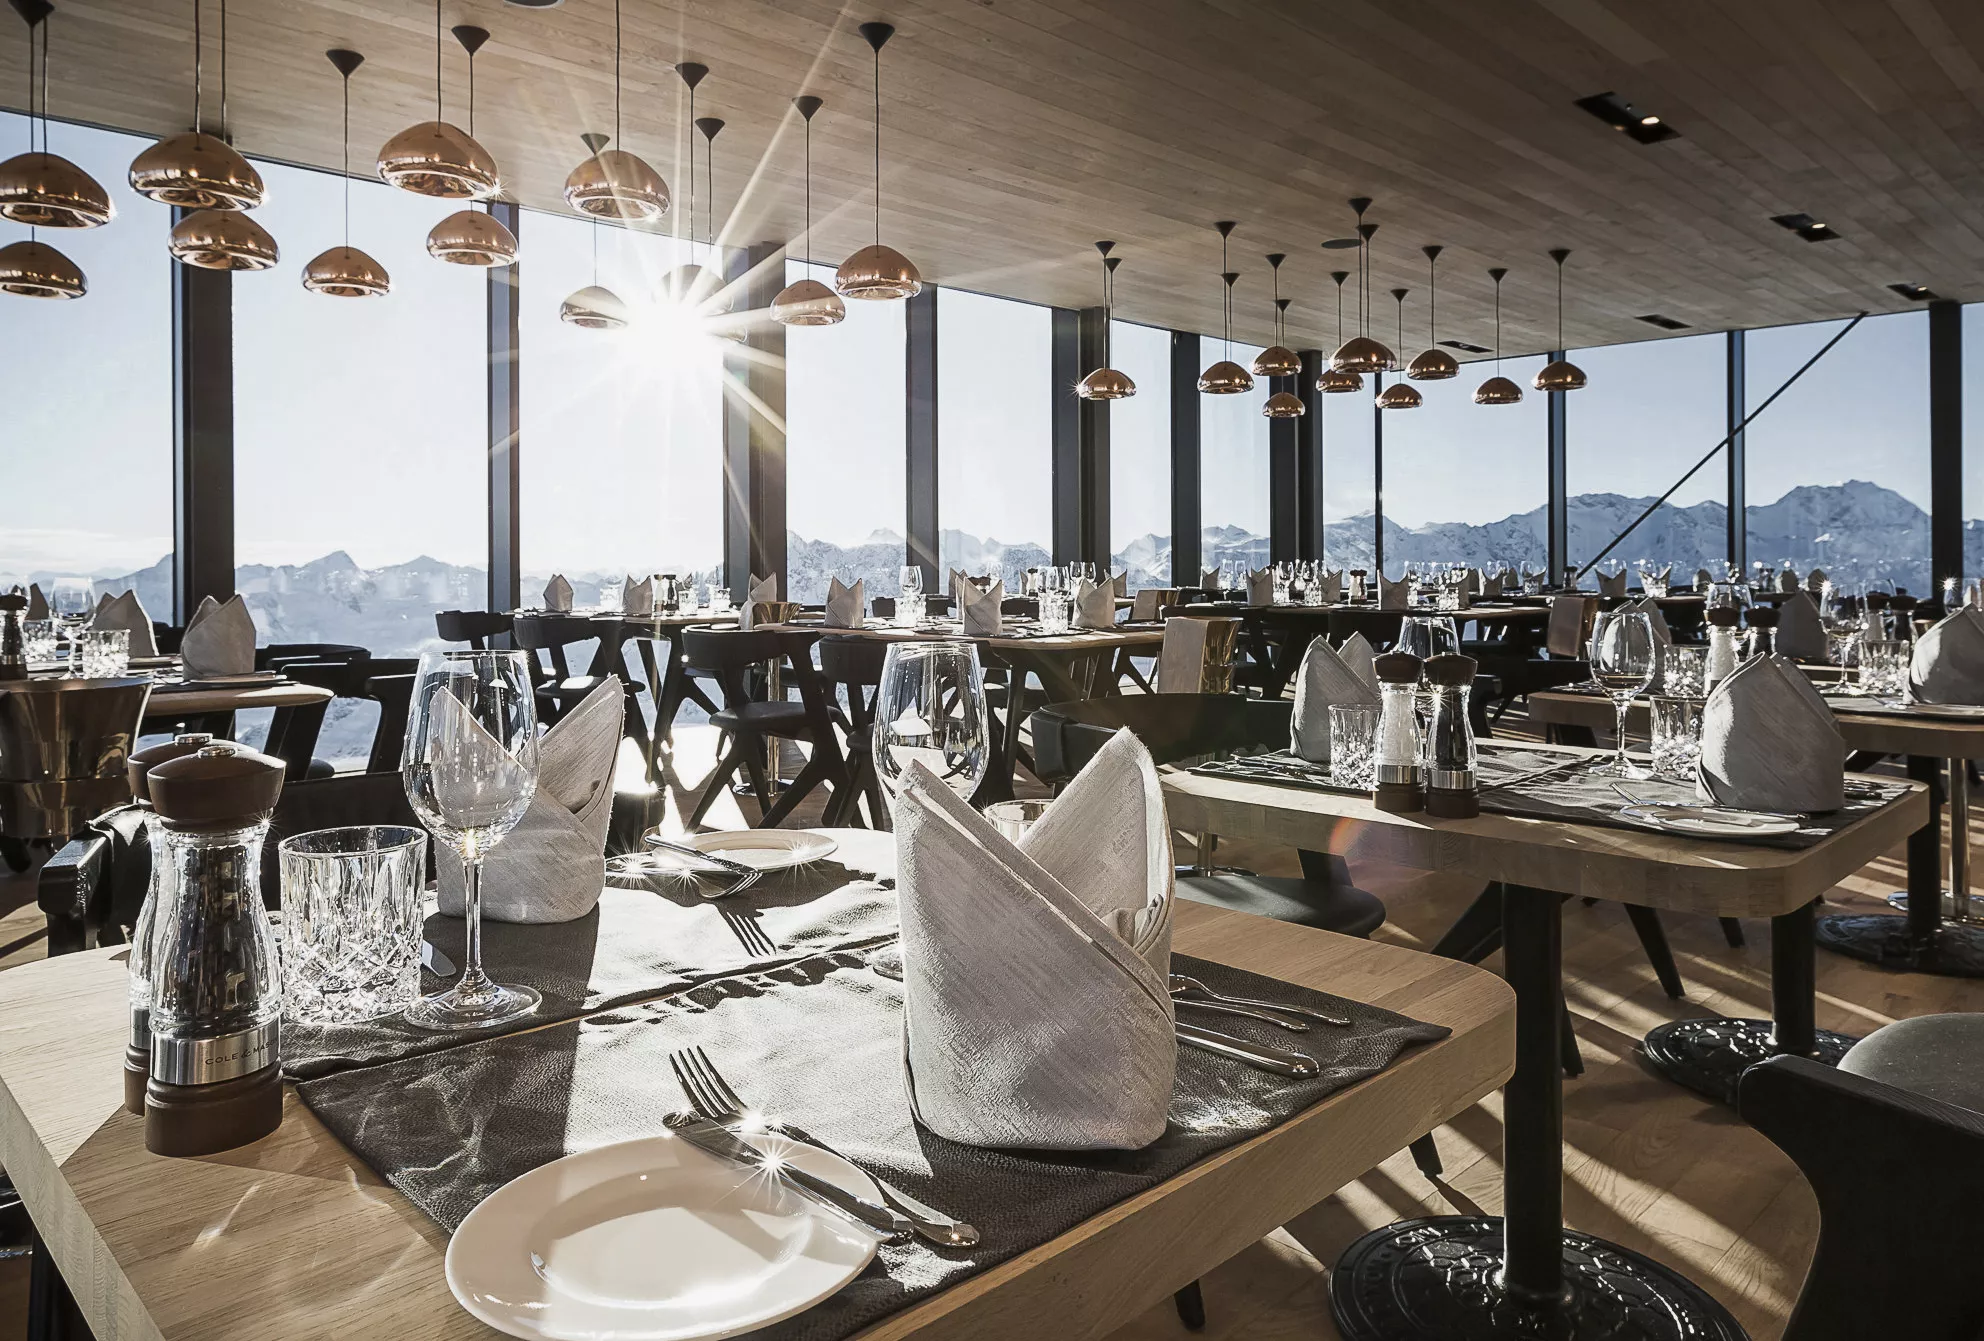 Ice Q Restaurant in Austria, Europe | Restaurants - Rated 3.8